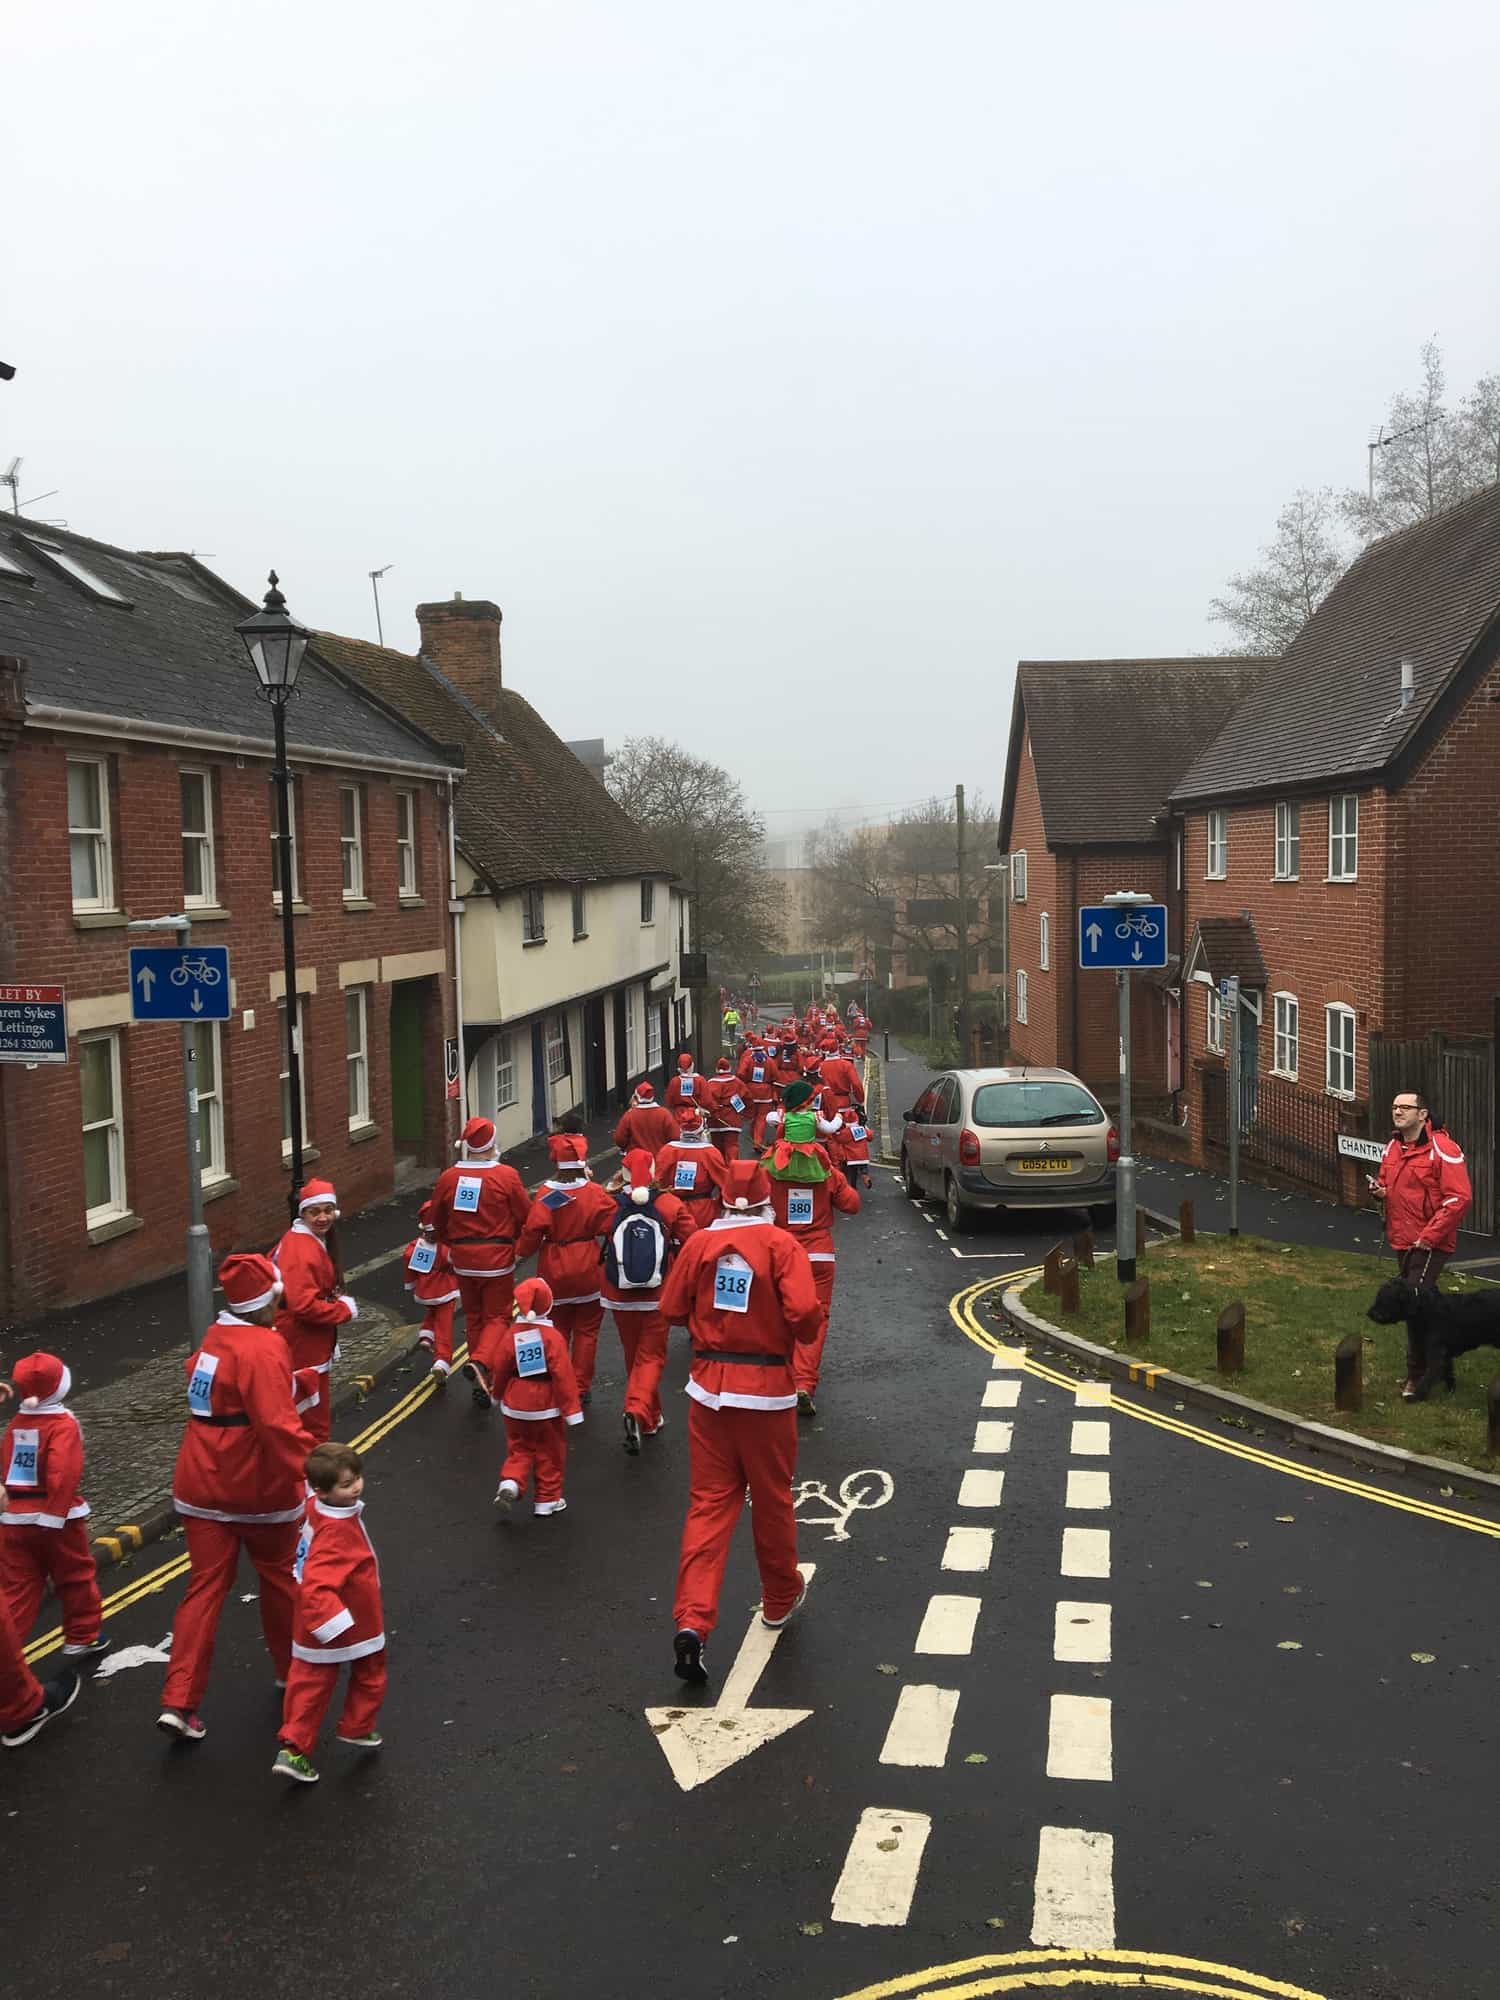 Santas running the race